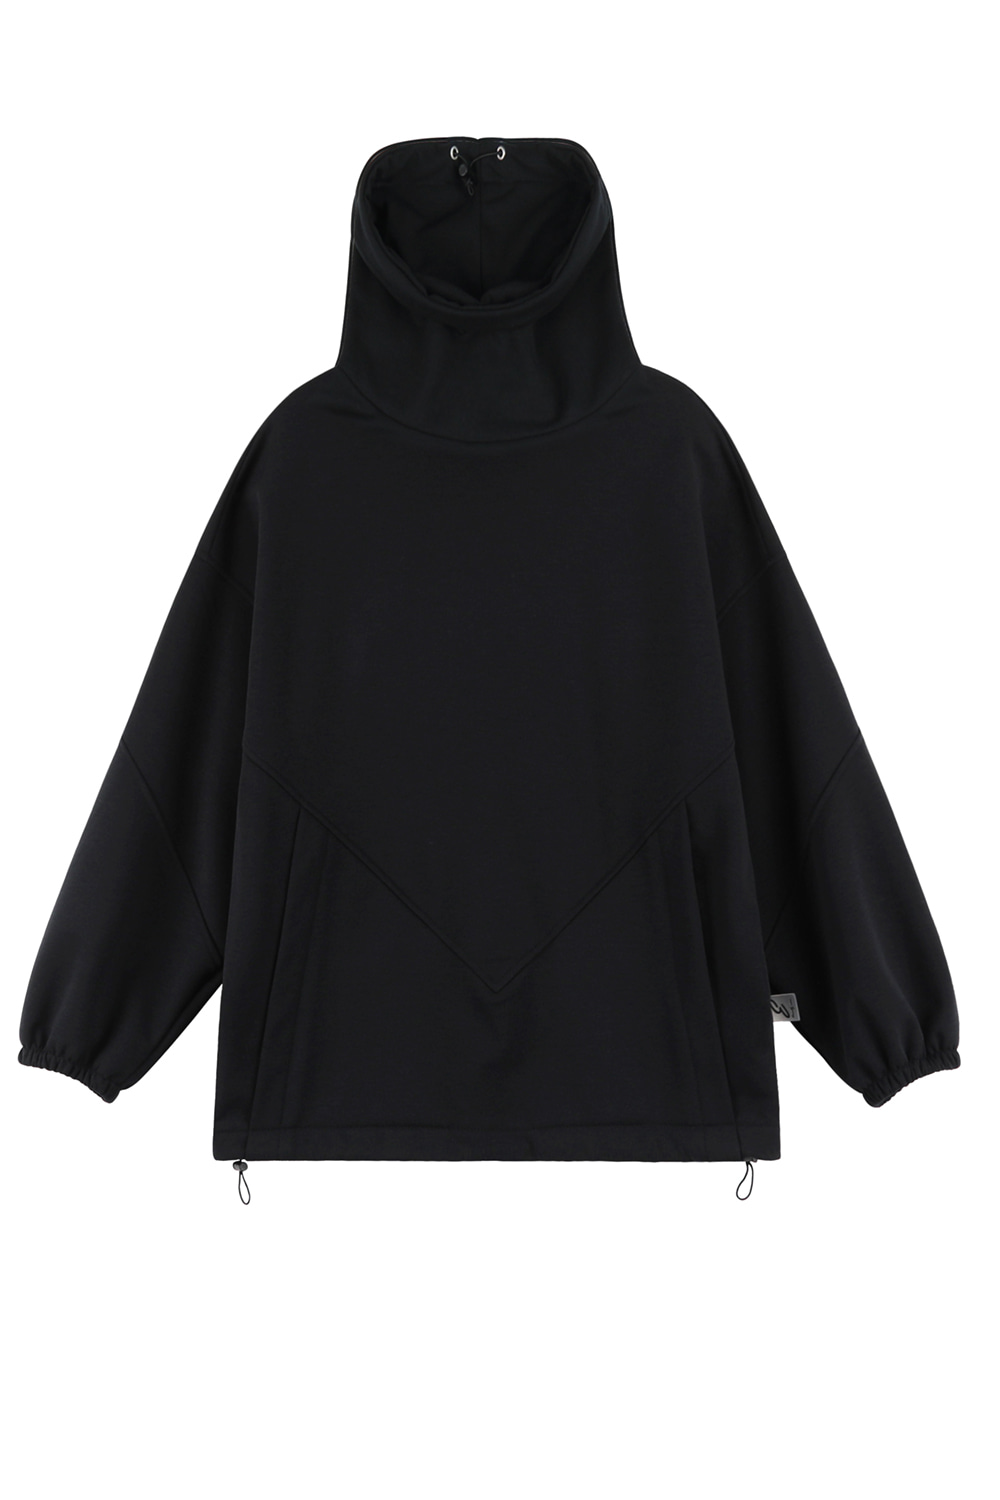 Oversize side zipper pullover_Black